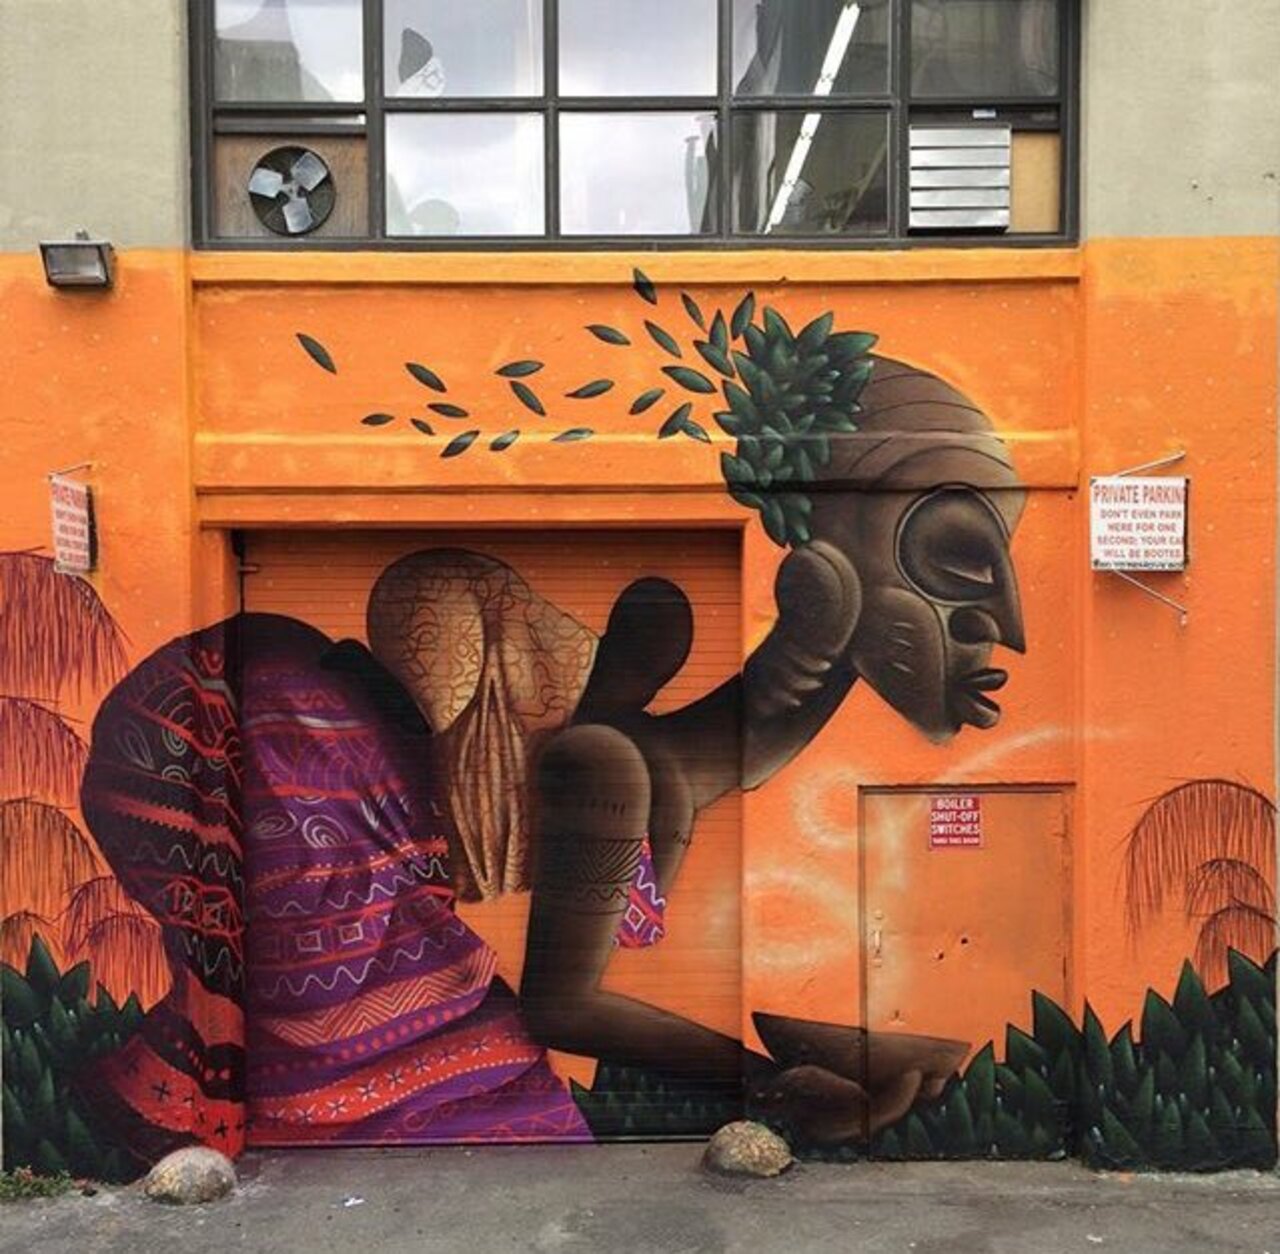 New Street Art by Alexandre Keto in NYC 

#art #graffiti #mural #streetart https://t.co/K5K18lrnMw